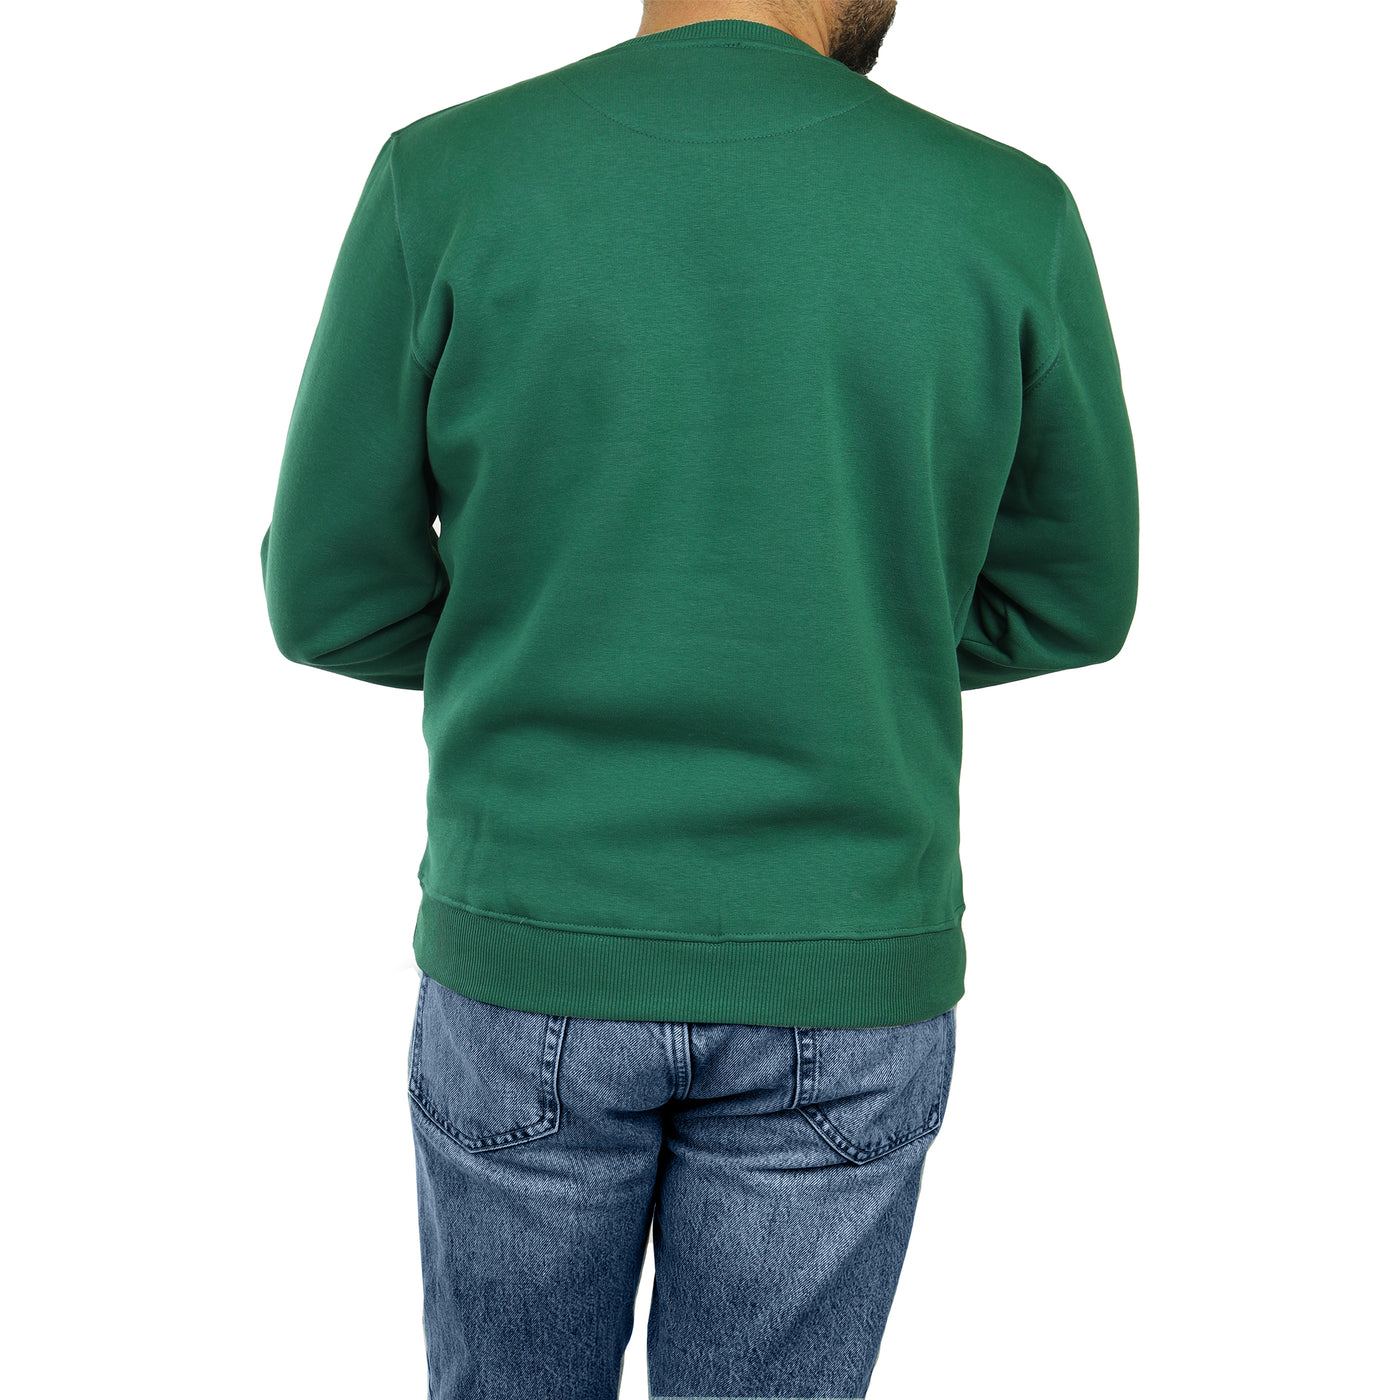 Printed Green Sweatshirt